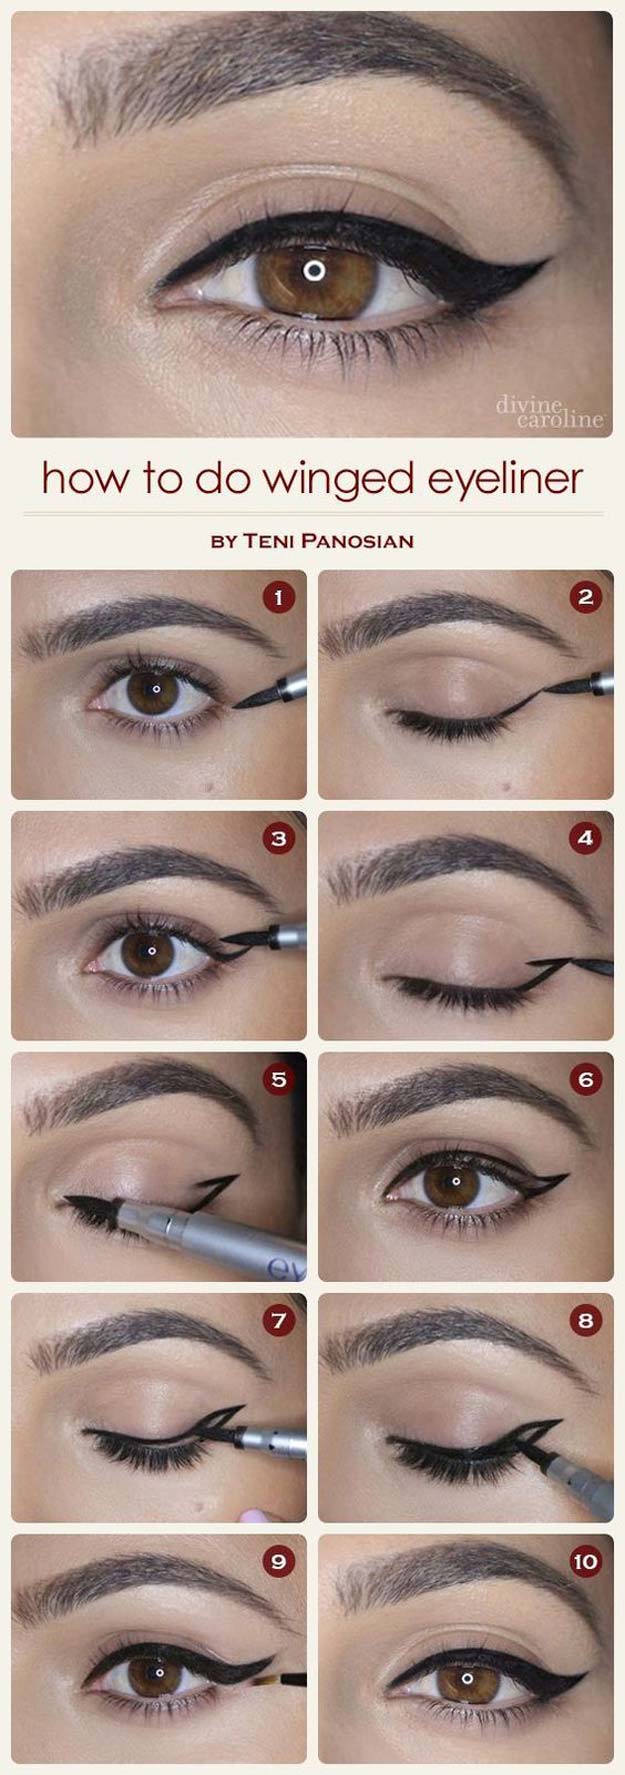 winged eyeliner tutorials how to do winged eyeliner like a boss beauty blogger